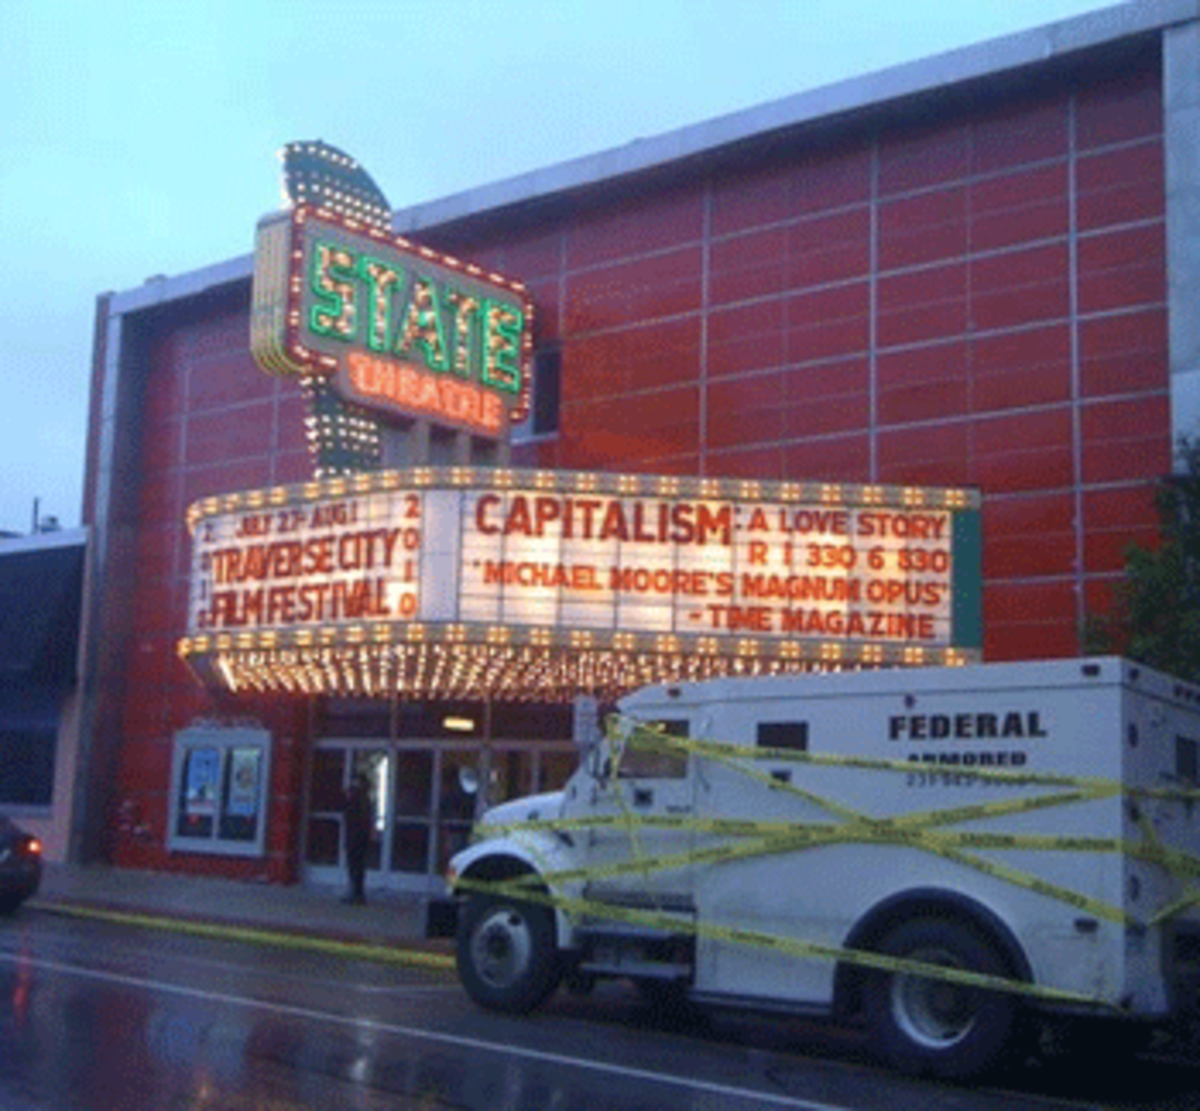 Outside a Traverse City, Michigan, theatre. Photo courtesy MichaelMoore.com.